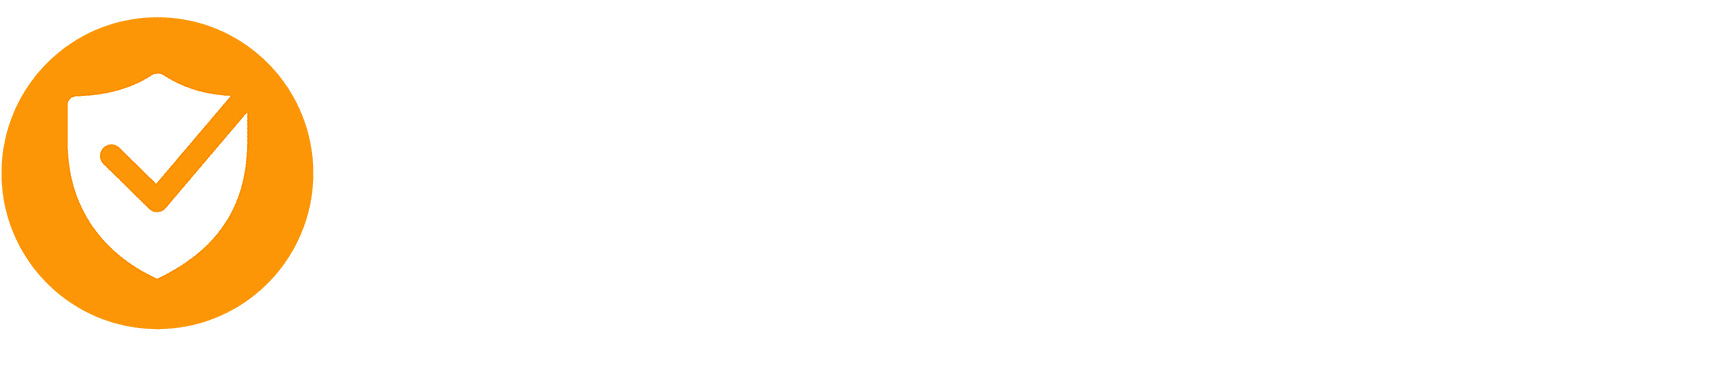 Paradigm Safeguard_White